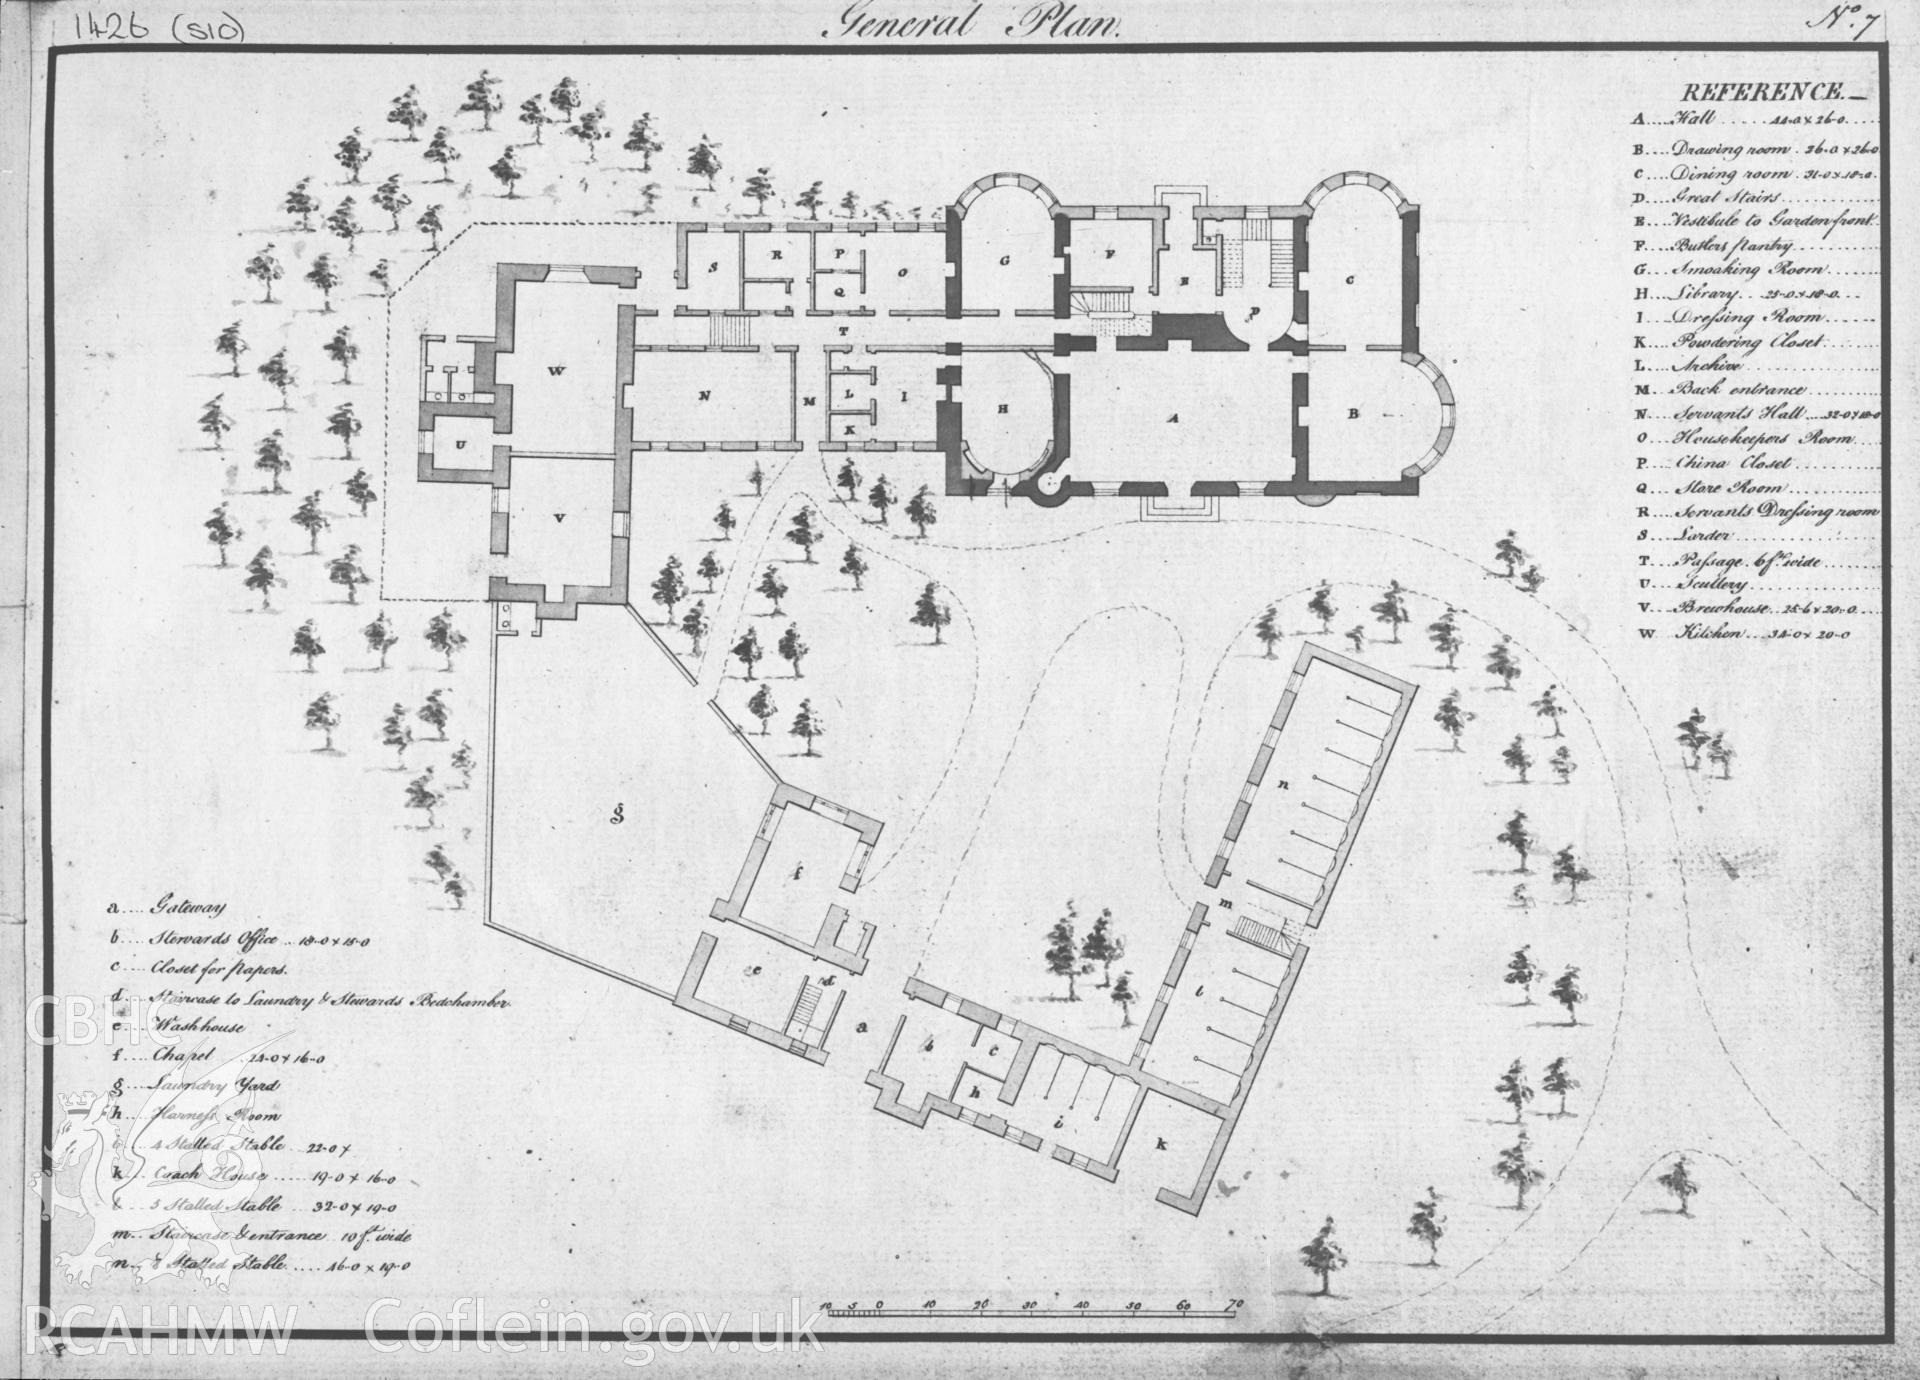 Digital copy of a 1762 drawing by Samuel Wyatt showing general plan of Penrhyn Castle and gardens.